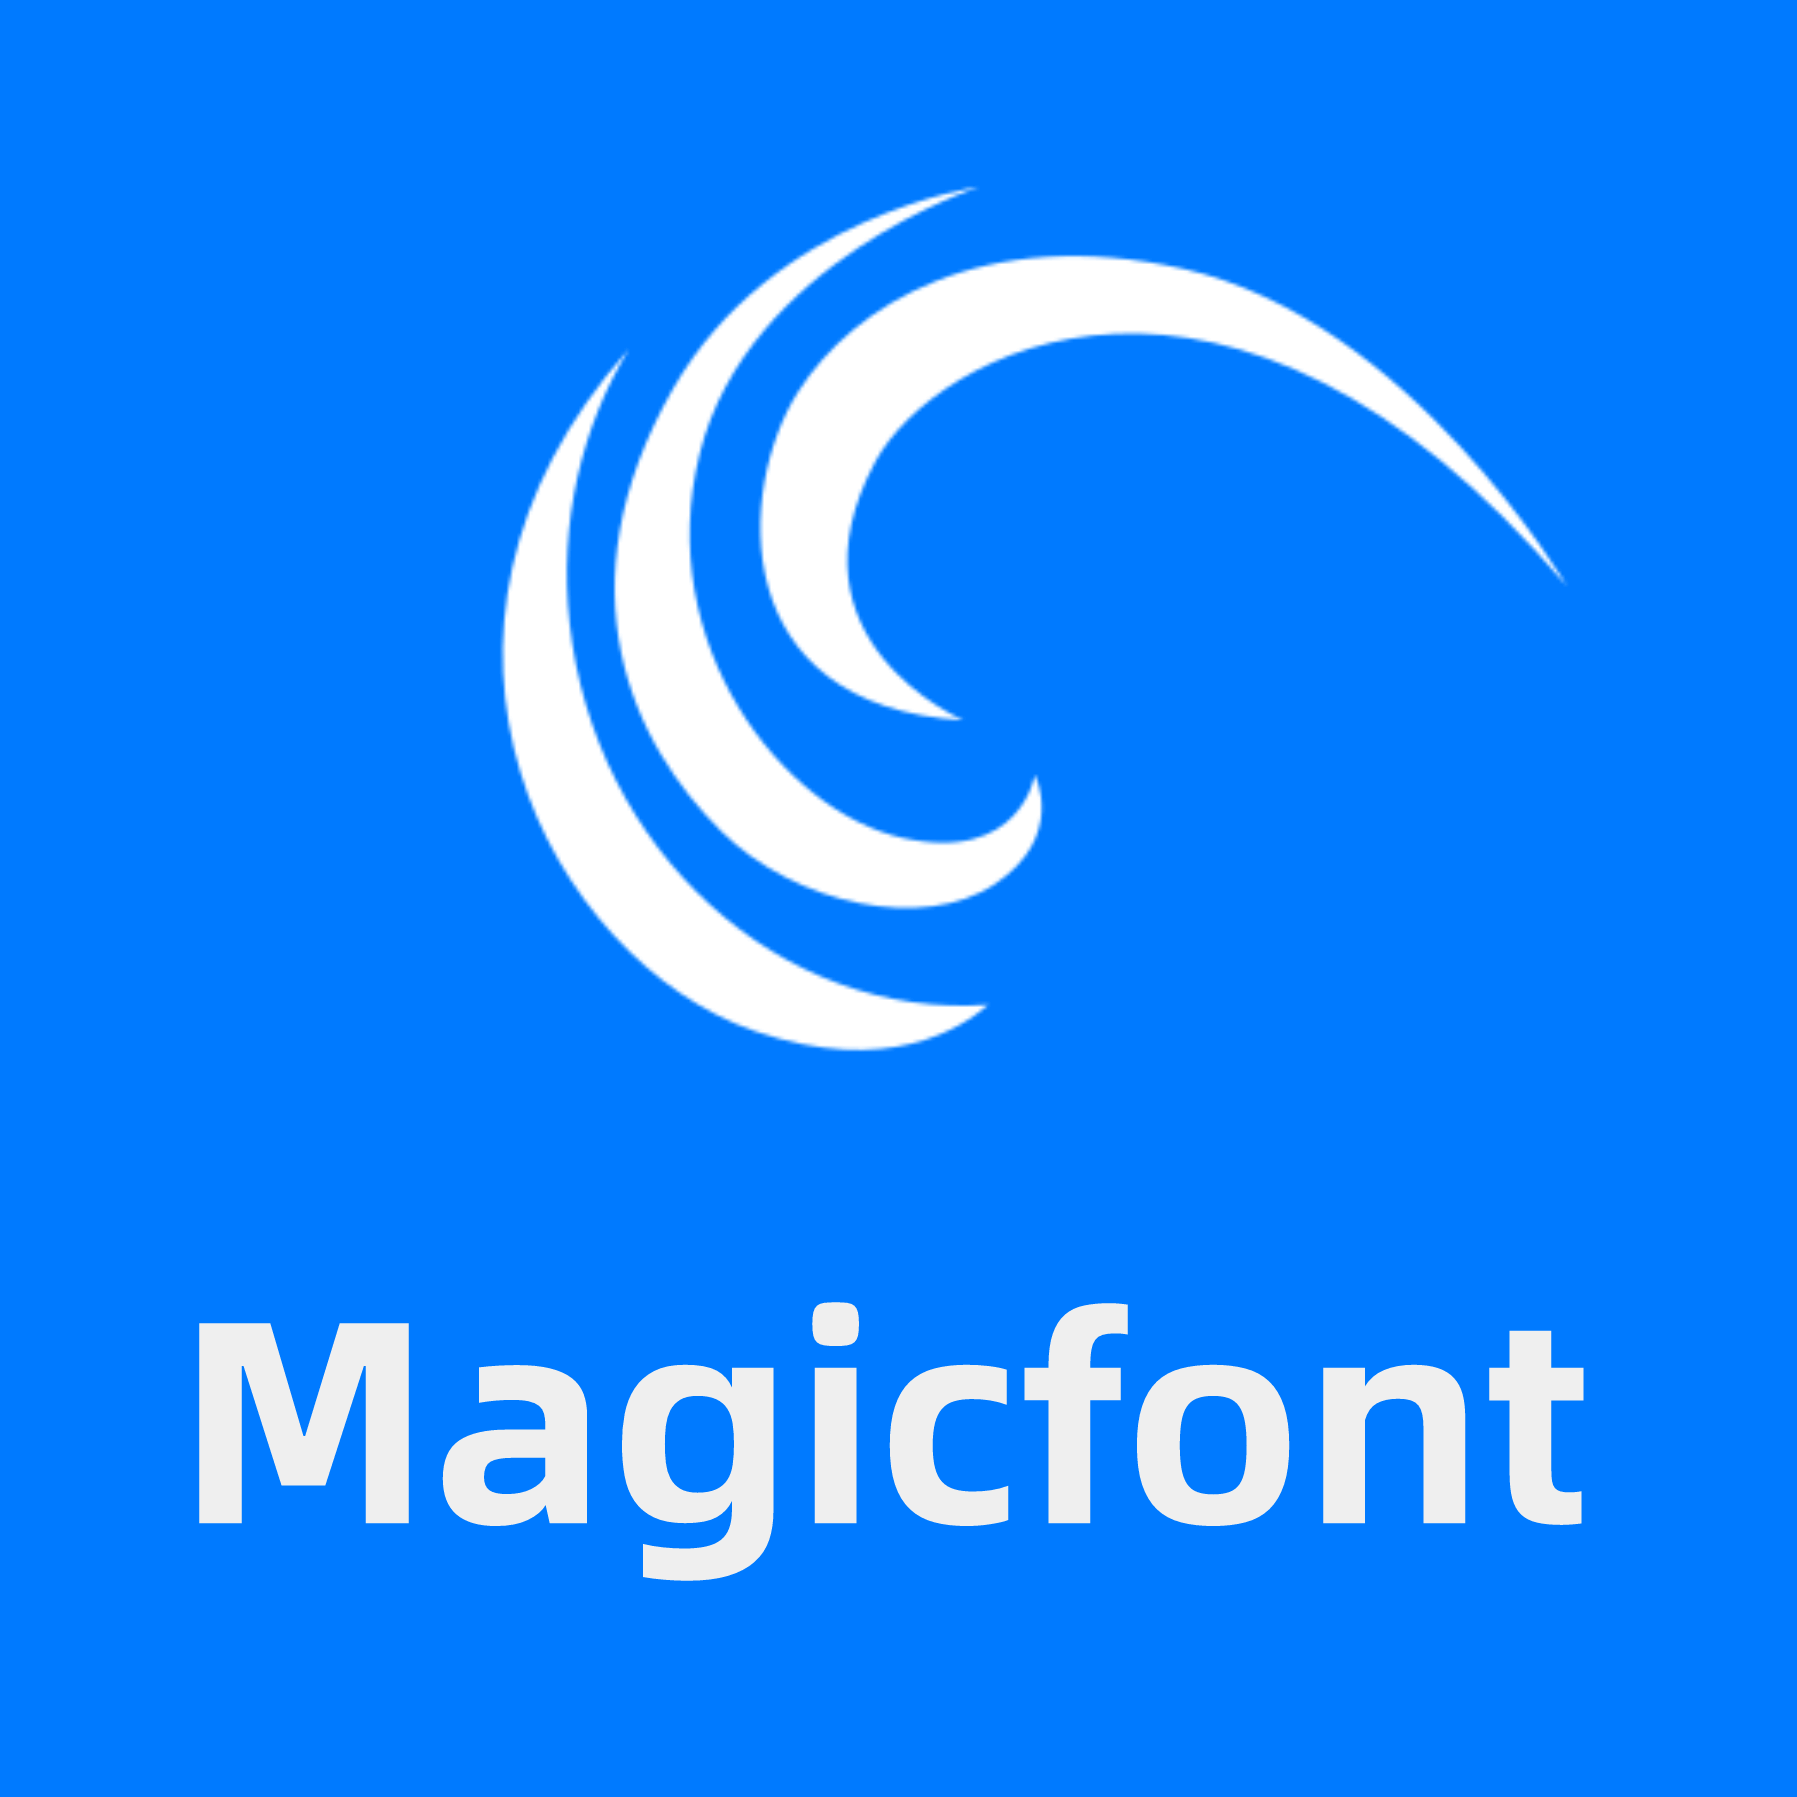 Magicfont logo